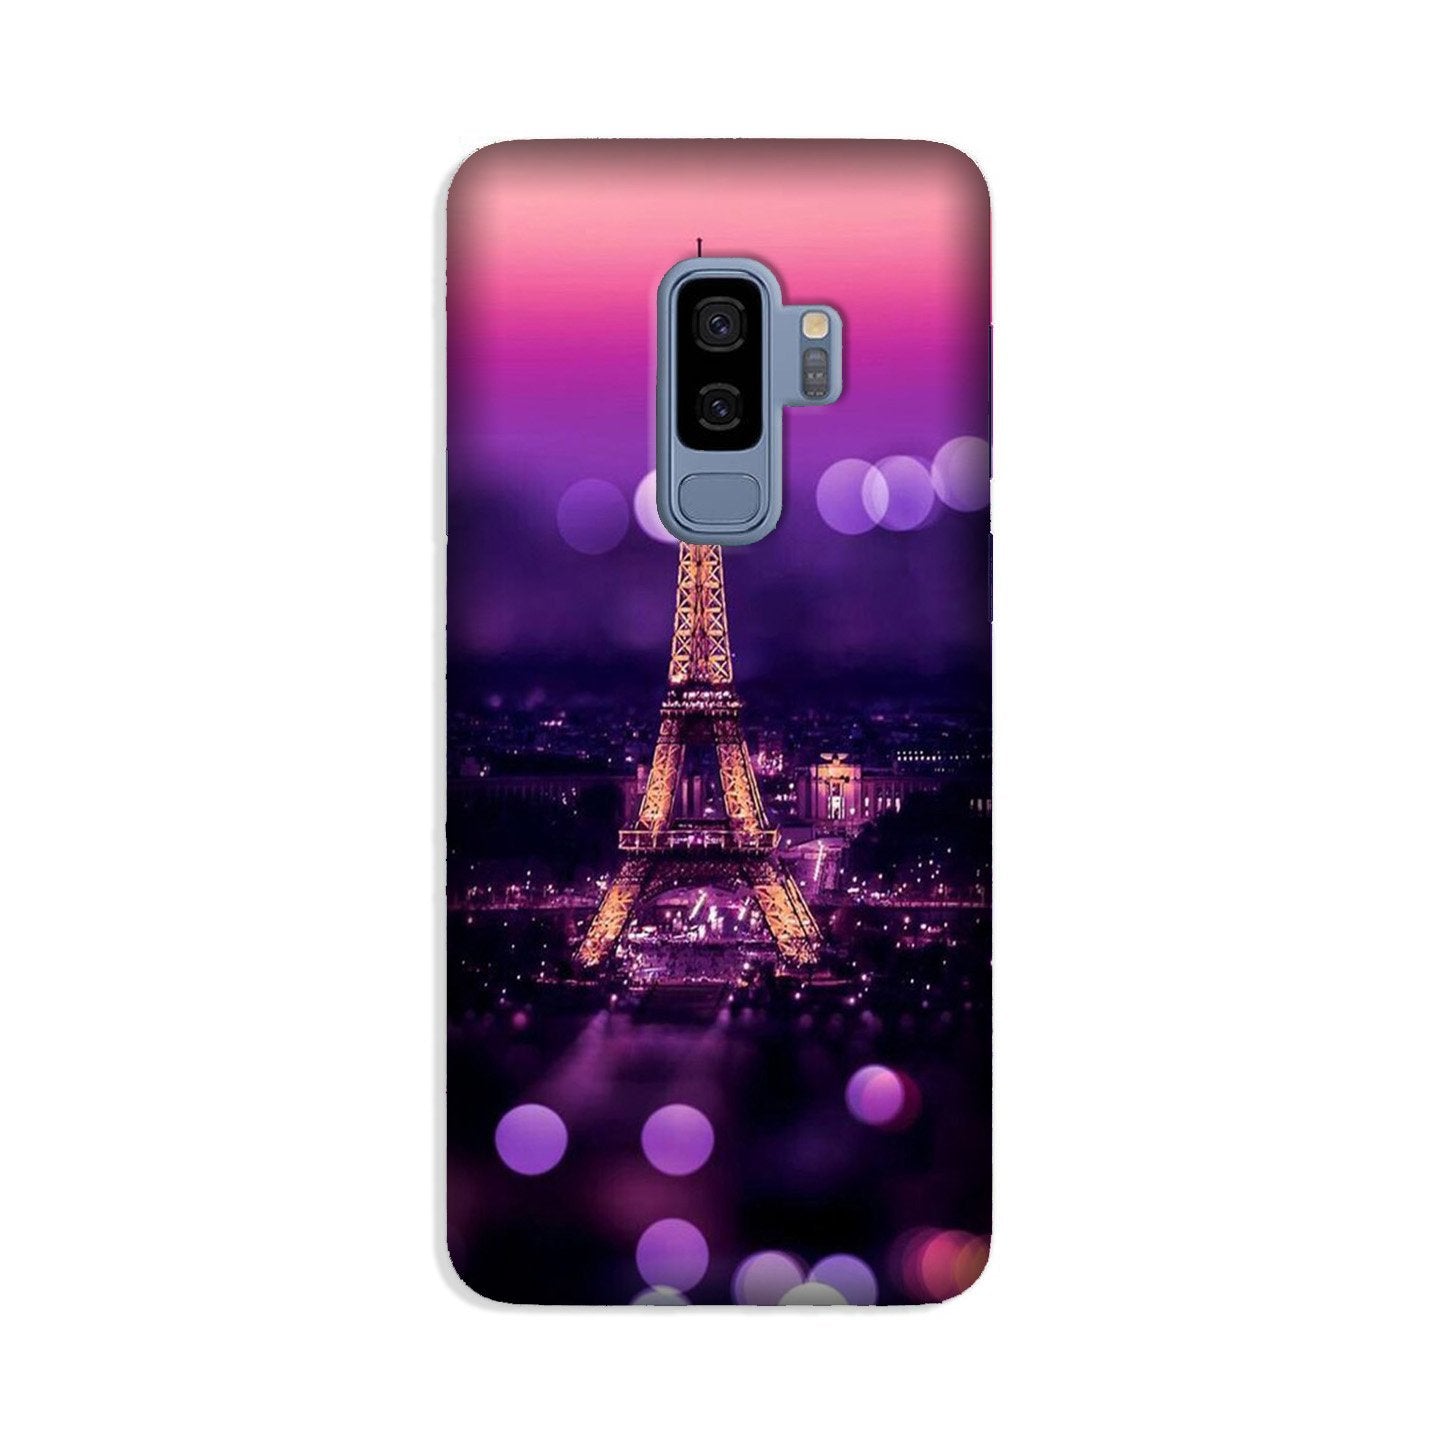 Eiffel Tower Case for Galaxy S9 Plus